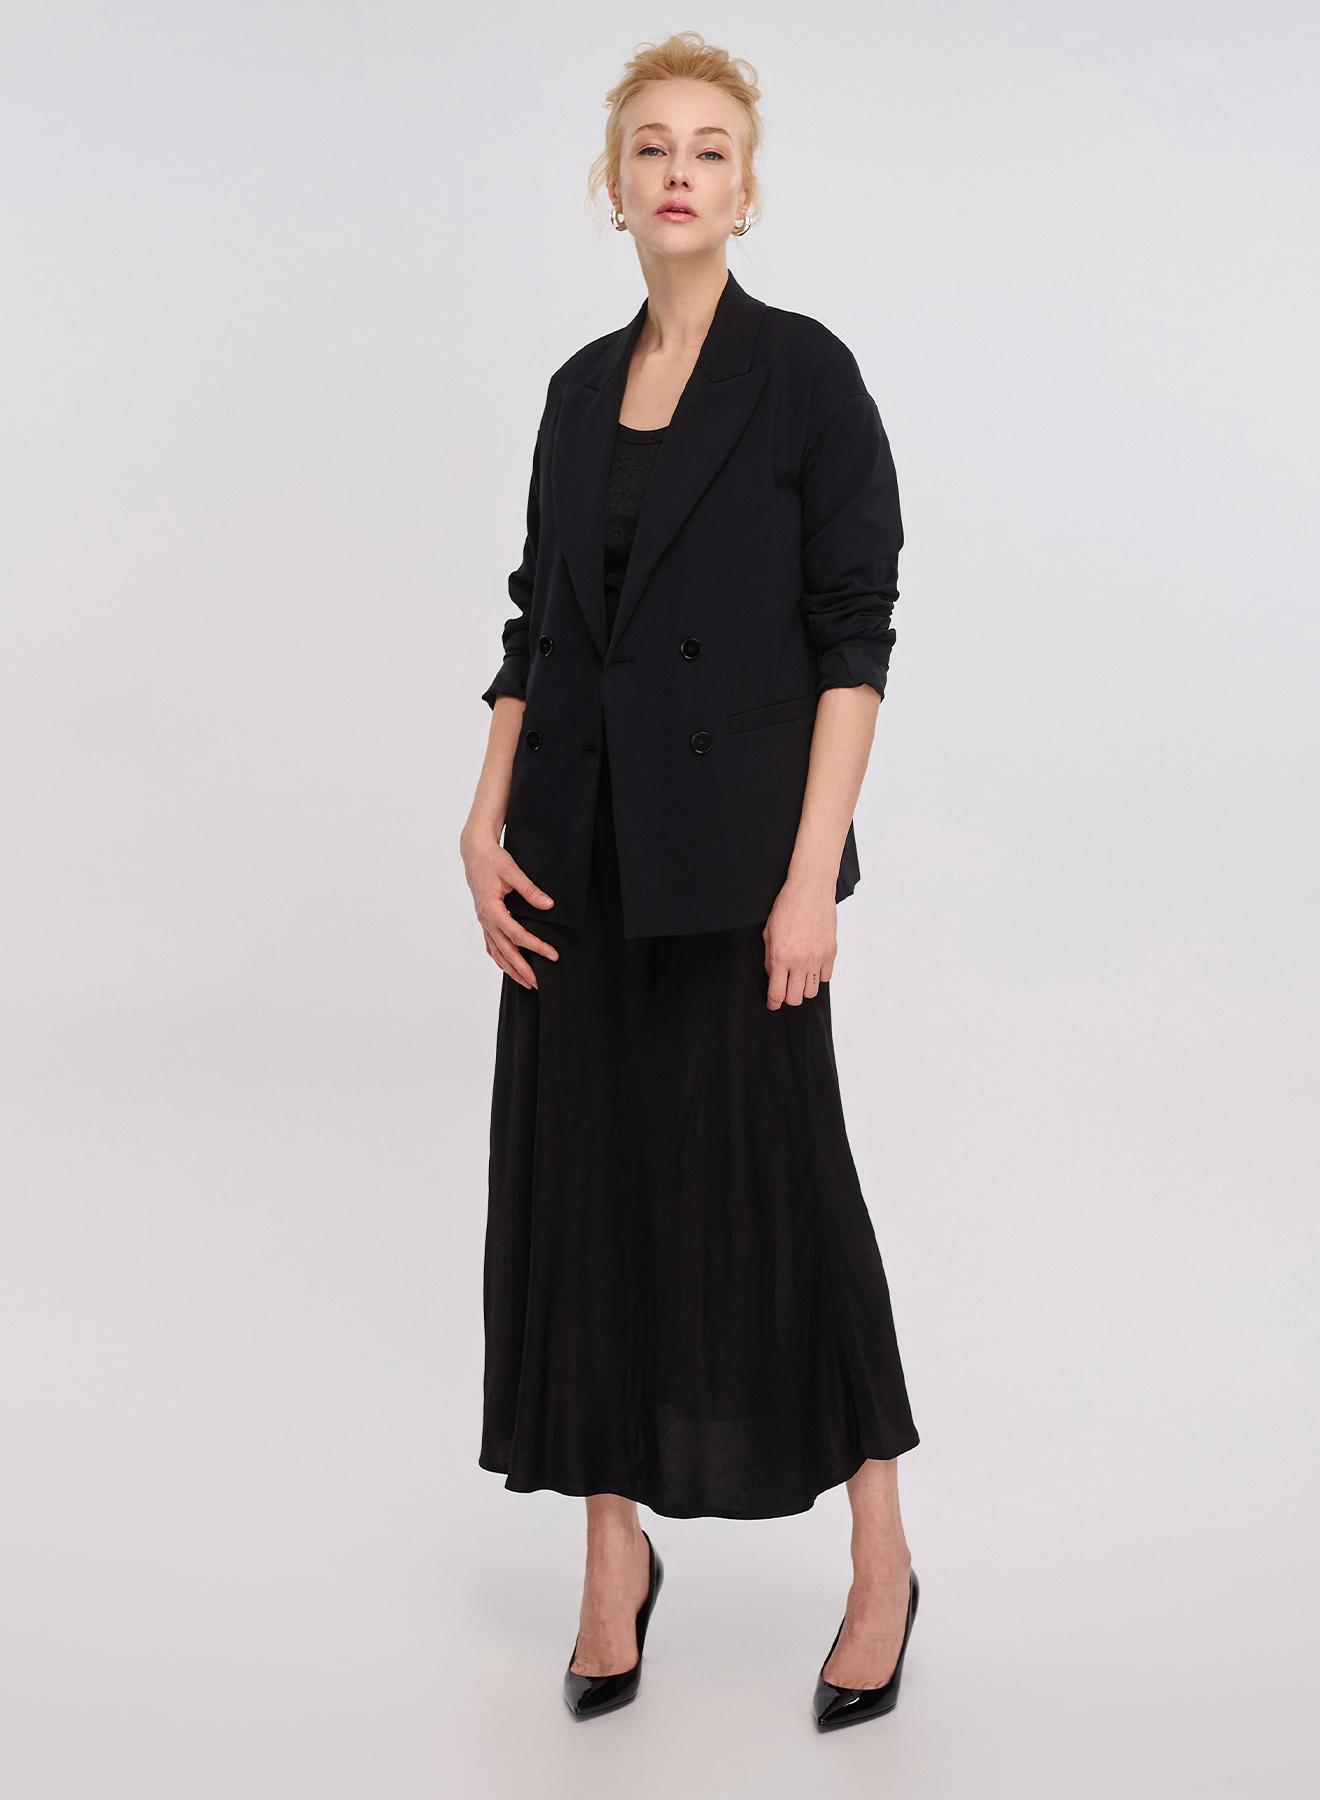 Black silky touch long Skirt Clothe - 3